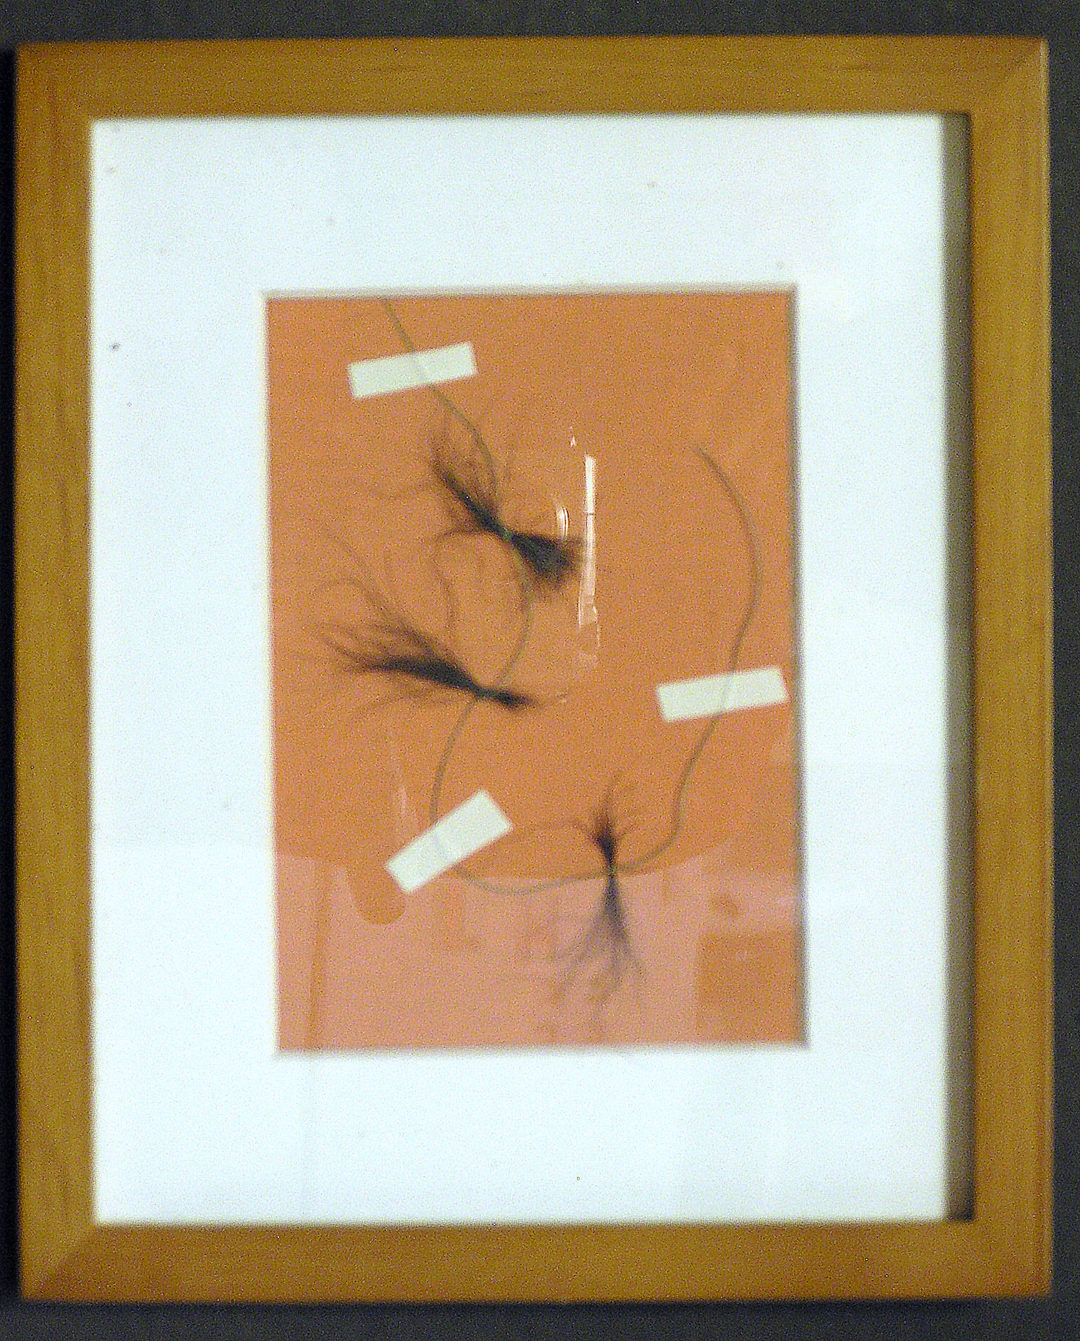 Peter Arakawa  – “Self Portrait” pubic hair, fishing line on canvas board